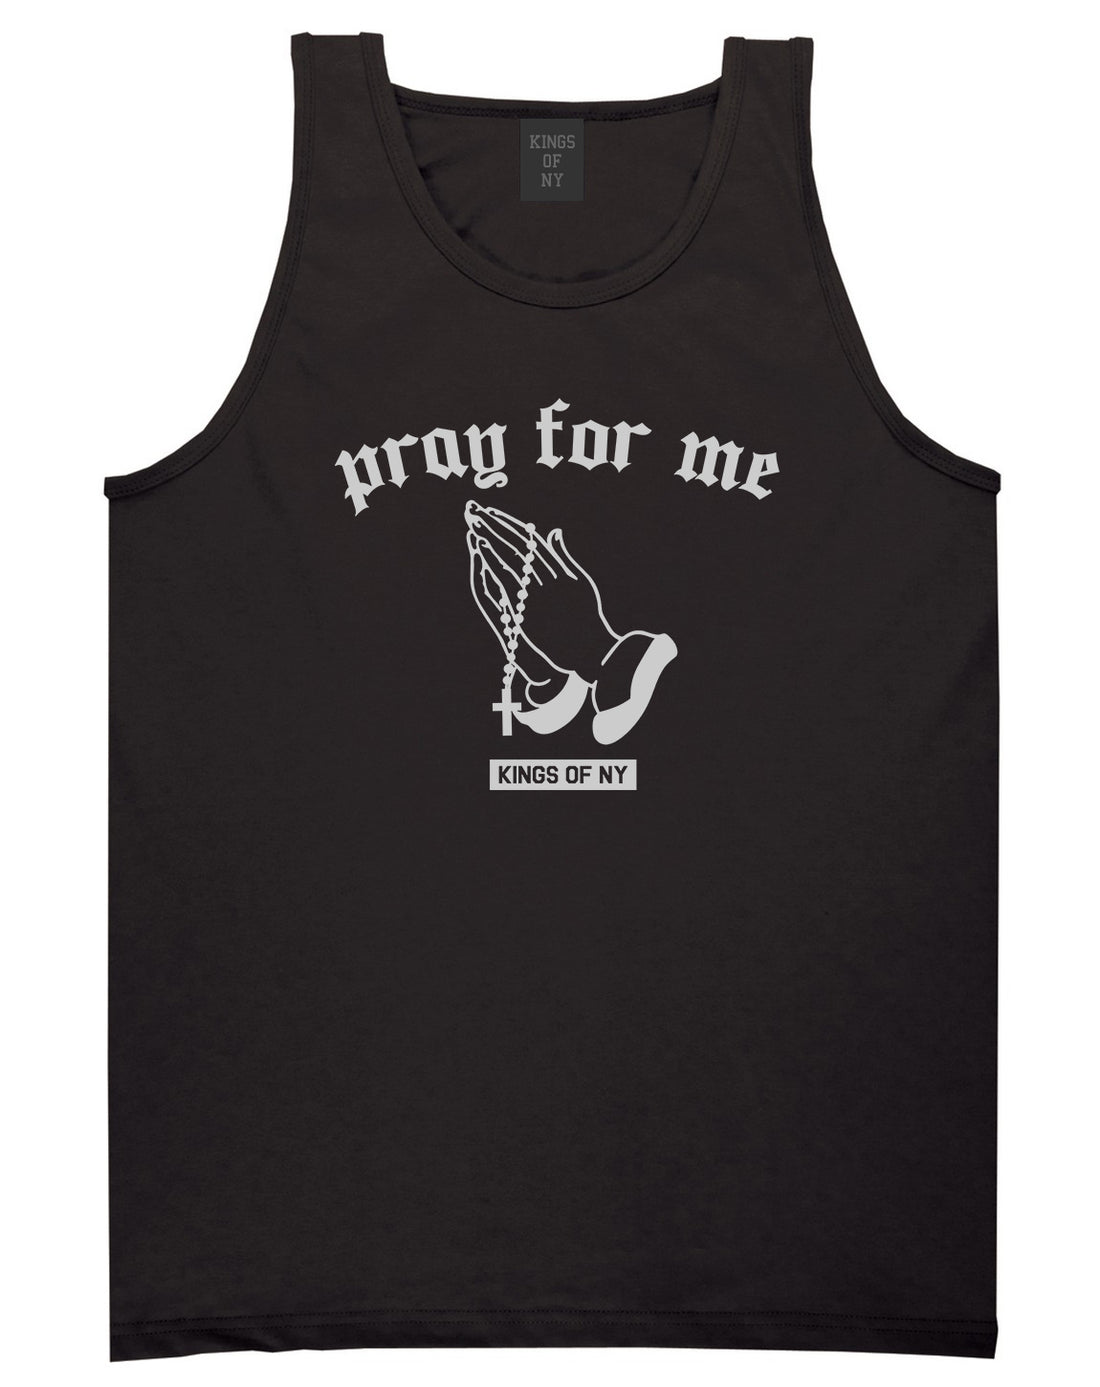 Pray For Me Mens Tank Top Shirt Black by Kings Of NY